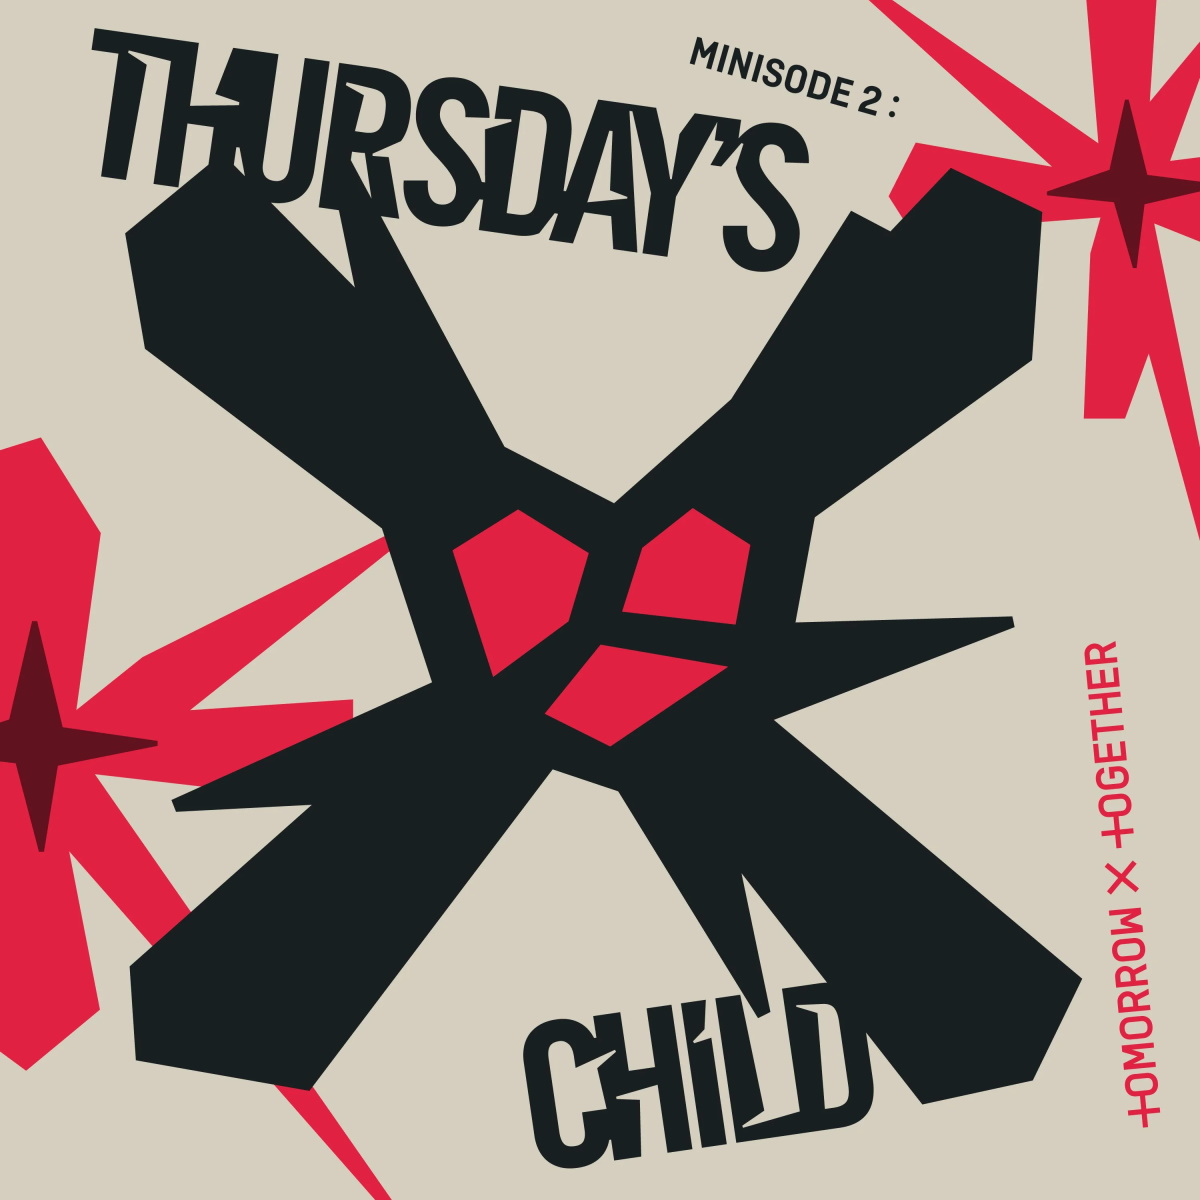 『TOMORROW X TOGETHER - Good Boy Gone Bad 歌詞』収録の『minisode 2: Thursday’s Child』ジャケット